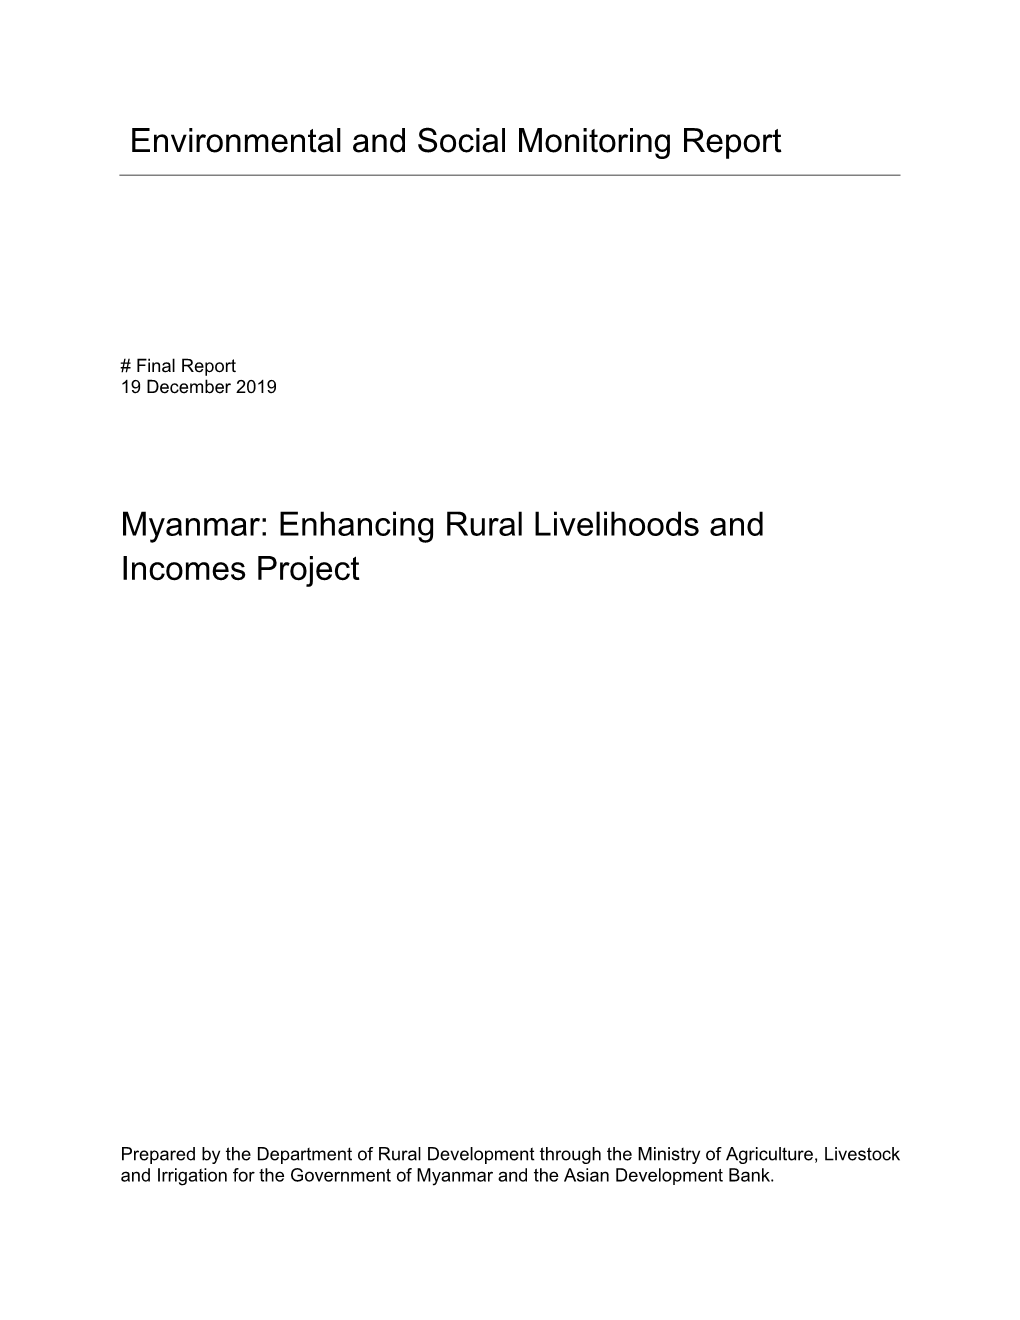 Myanmar: Enhancing Rural Livelihoods and Incomes Project